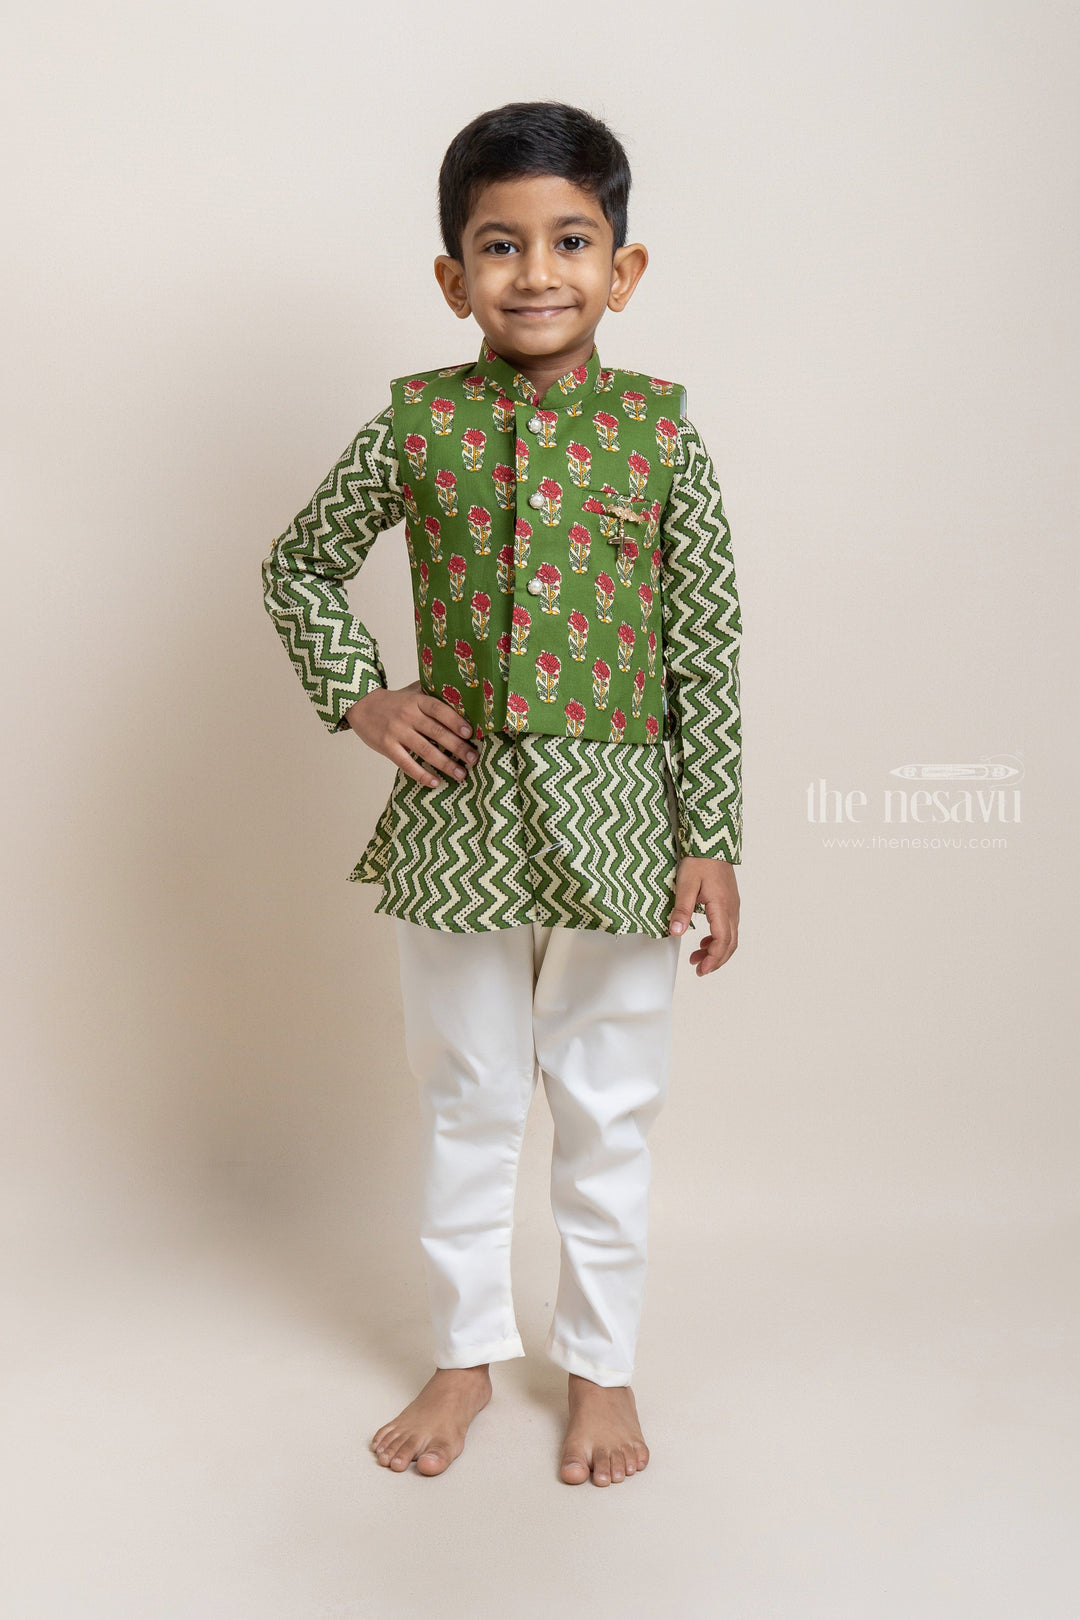 The Nesavu Boys Jacket Sets Fashionable Green Zig-Zag Printed Kurta Set With Overjacket For Boys Nesavu 12 (3M) / Green / Cotton BES289A-12 Festive Wear Collection For Boys | Premium kurta Set | The Nesavu